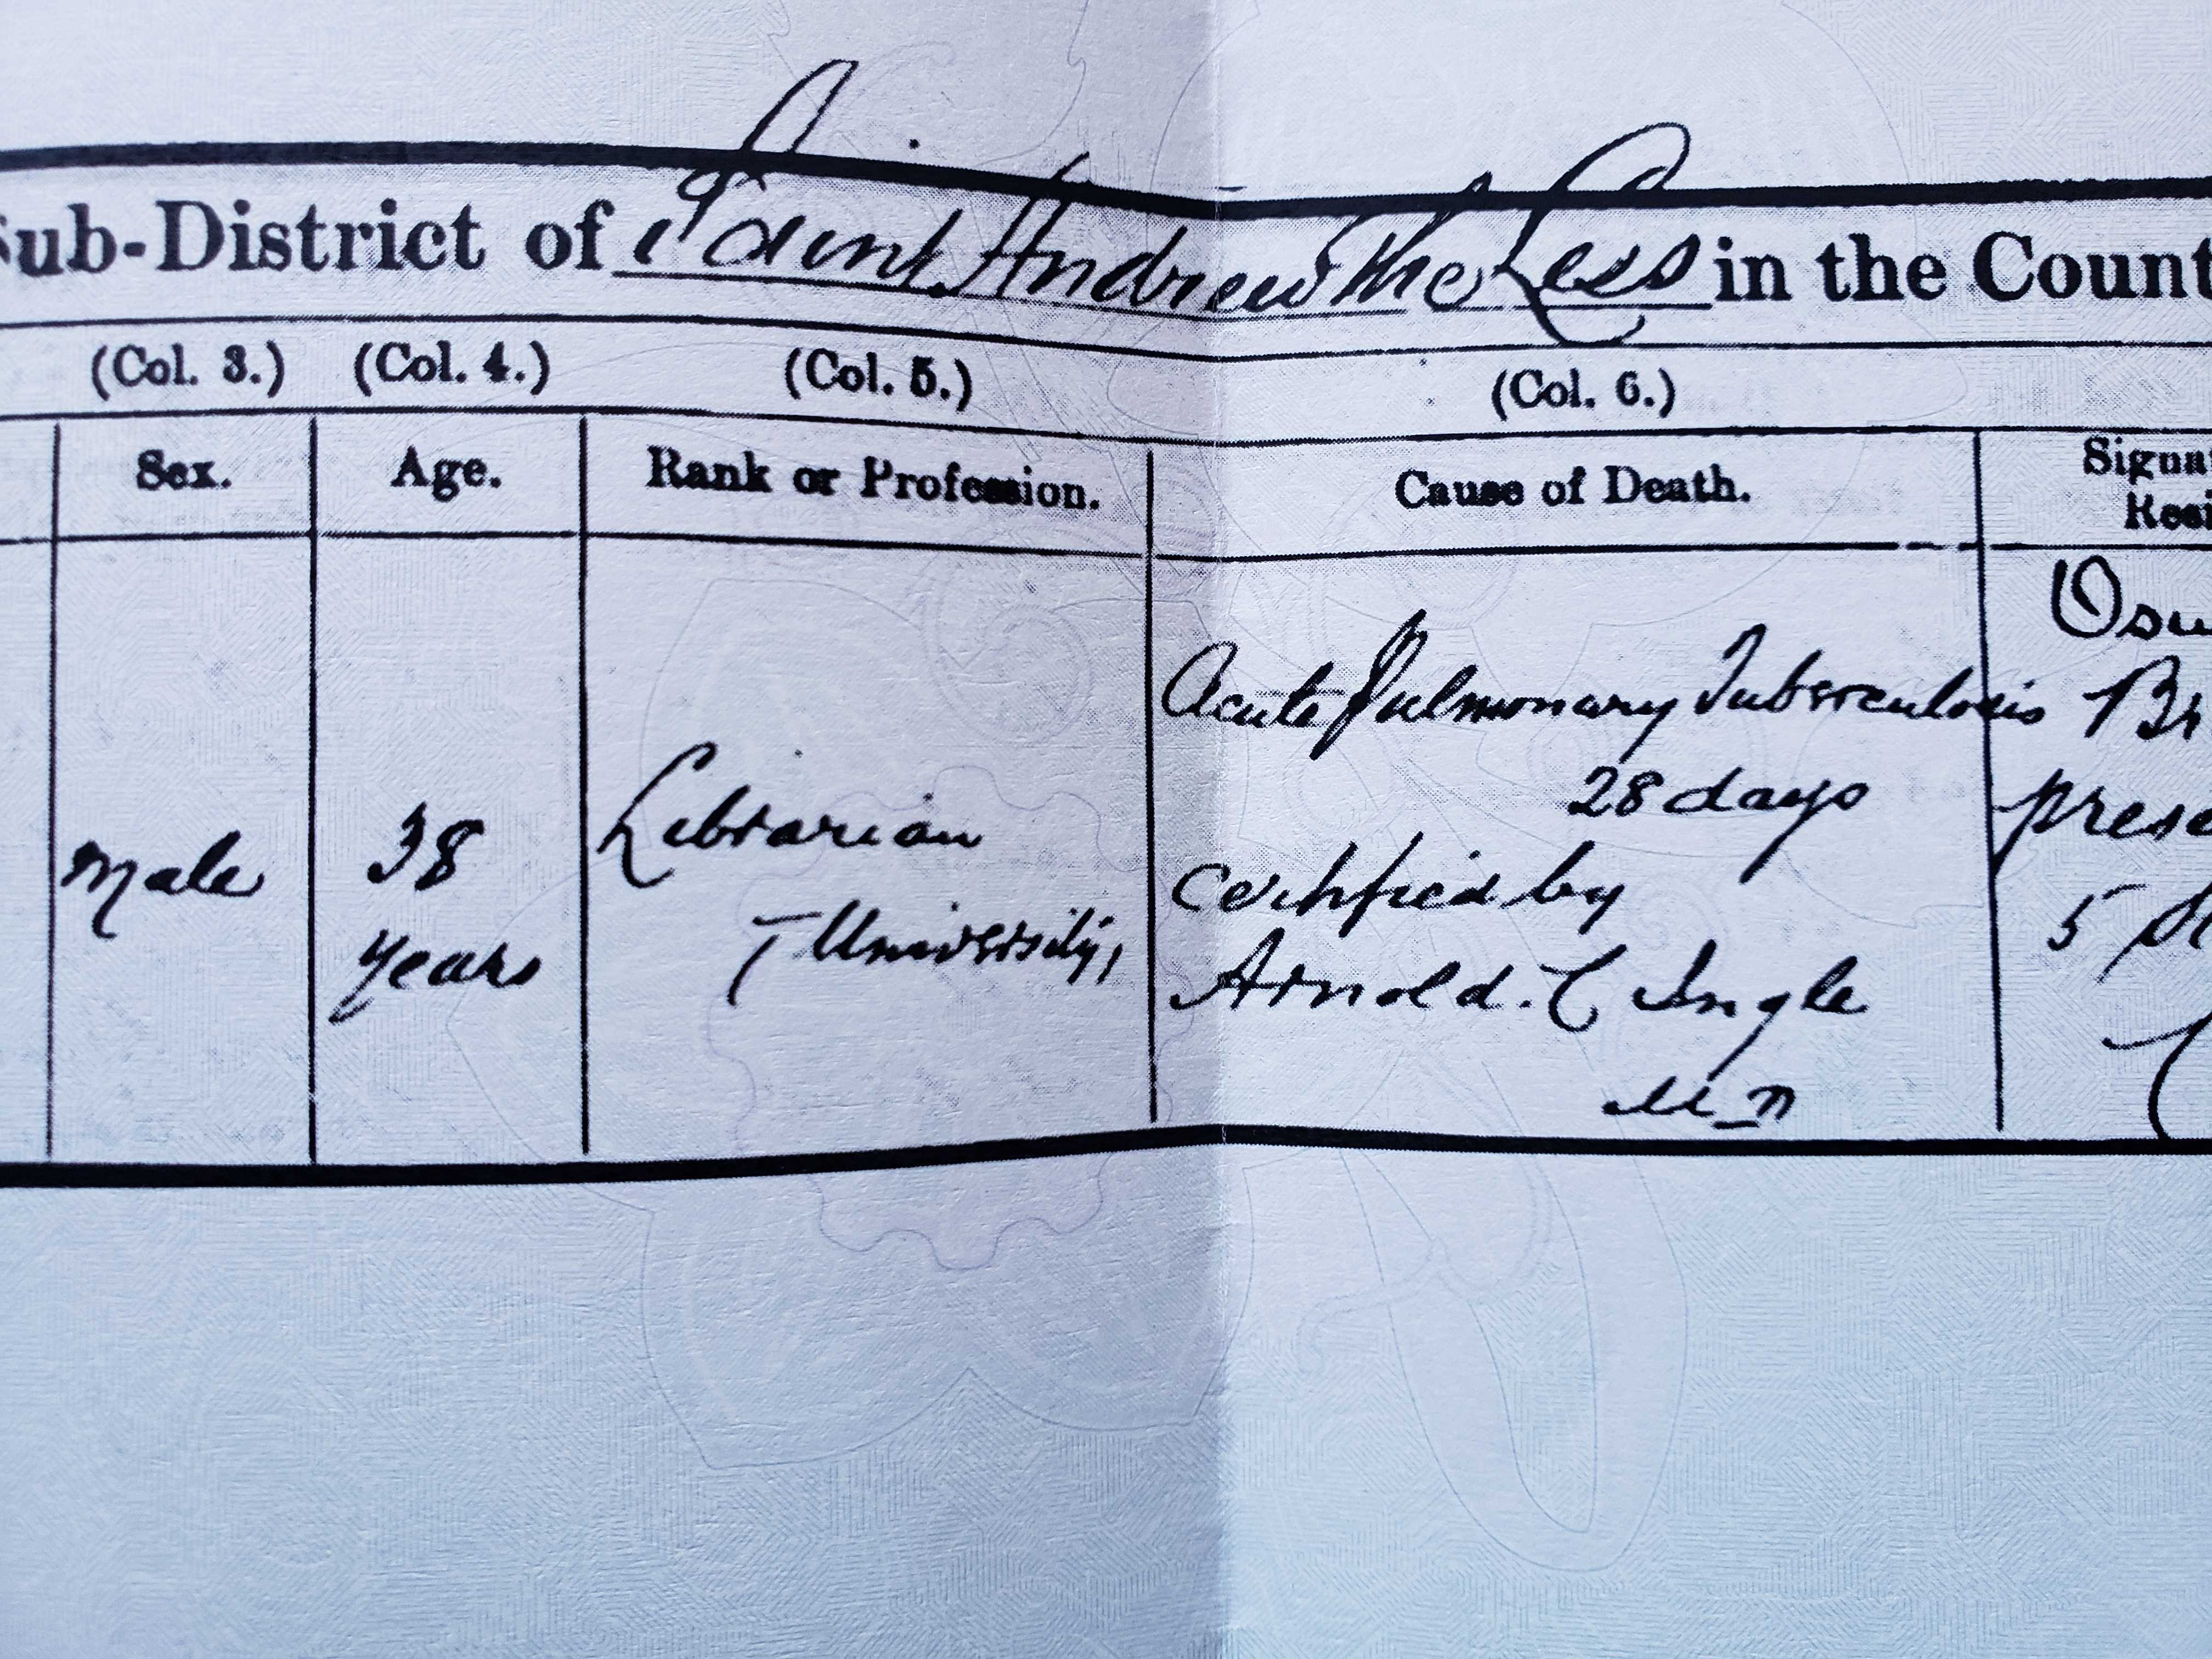 Worman's death certificate